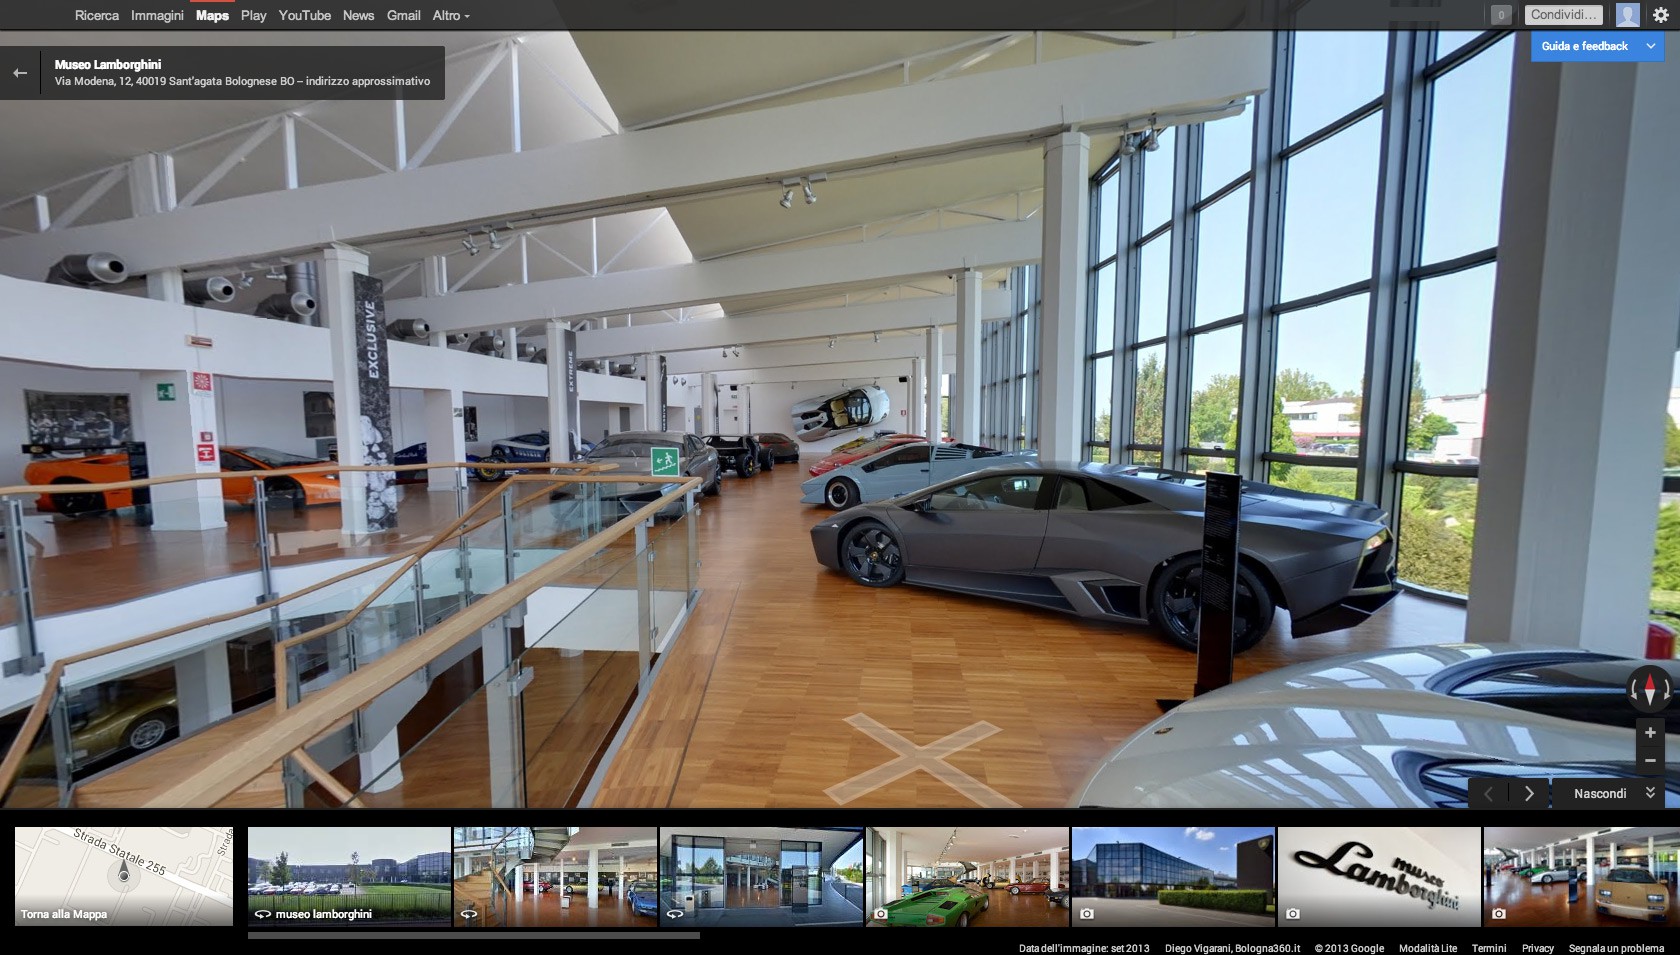 Lamborghini enseña su Museo en Google Street View